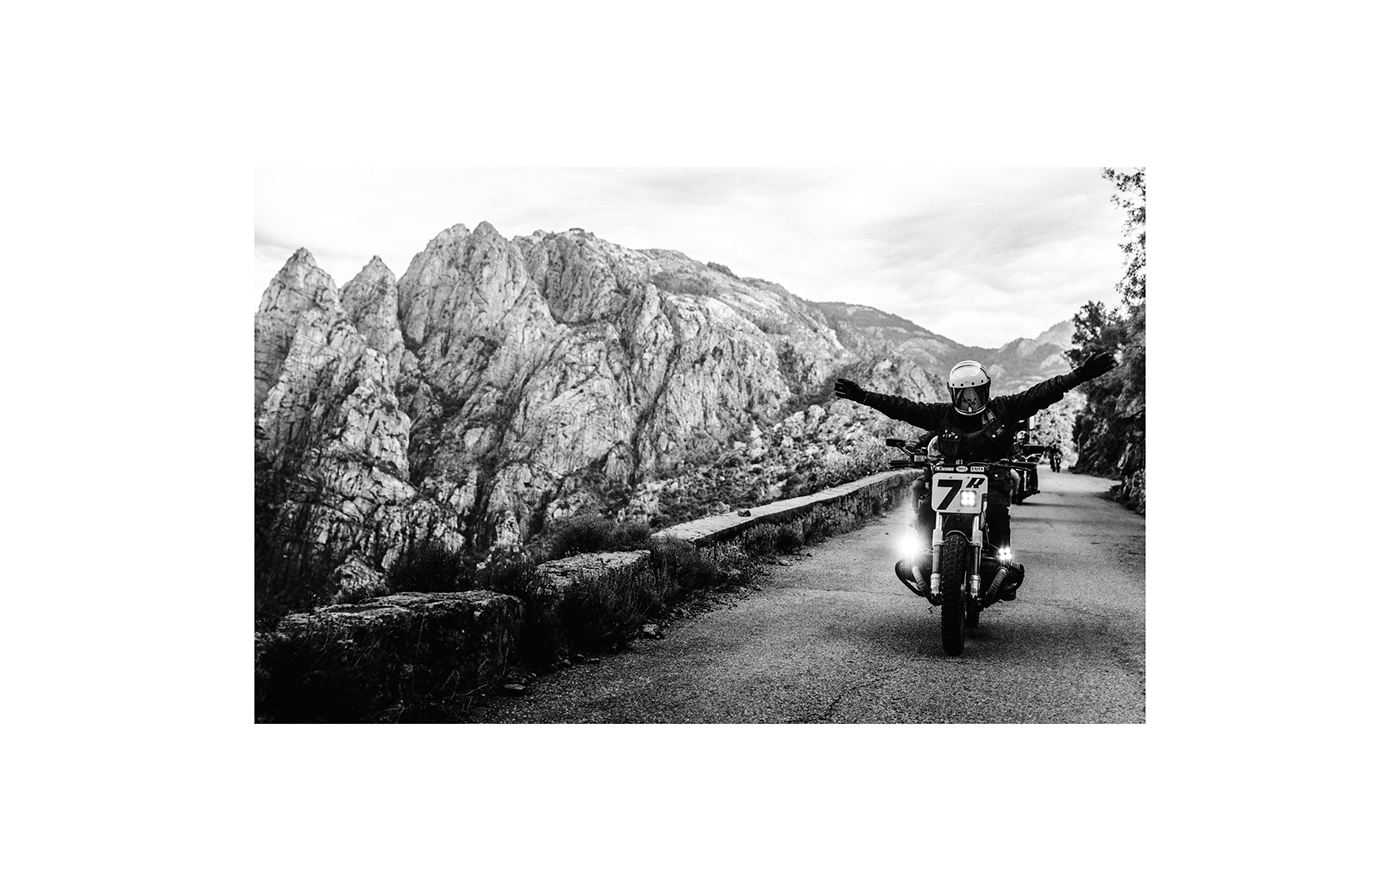 RoadTrip corsica donpaparide laurentnivalle motorcycles viewoflife backroads